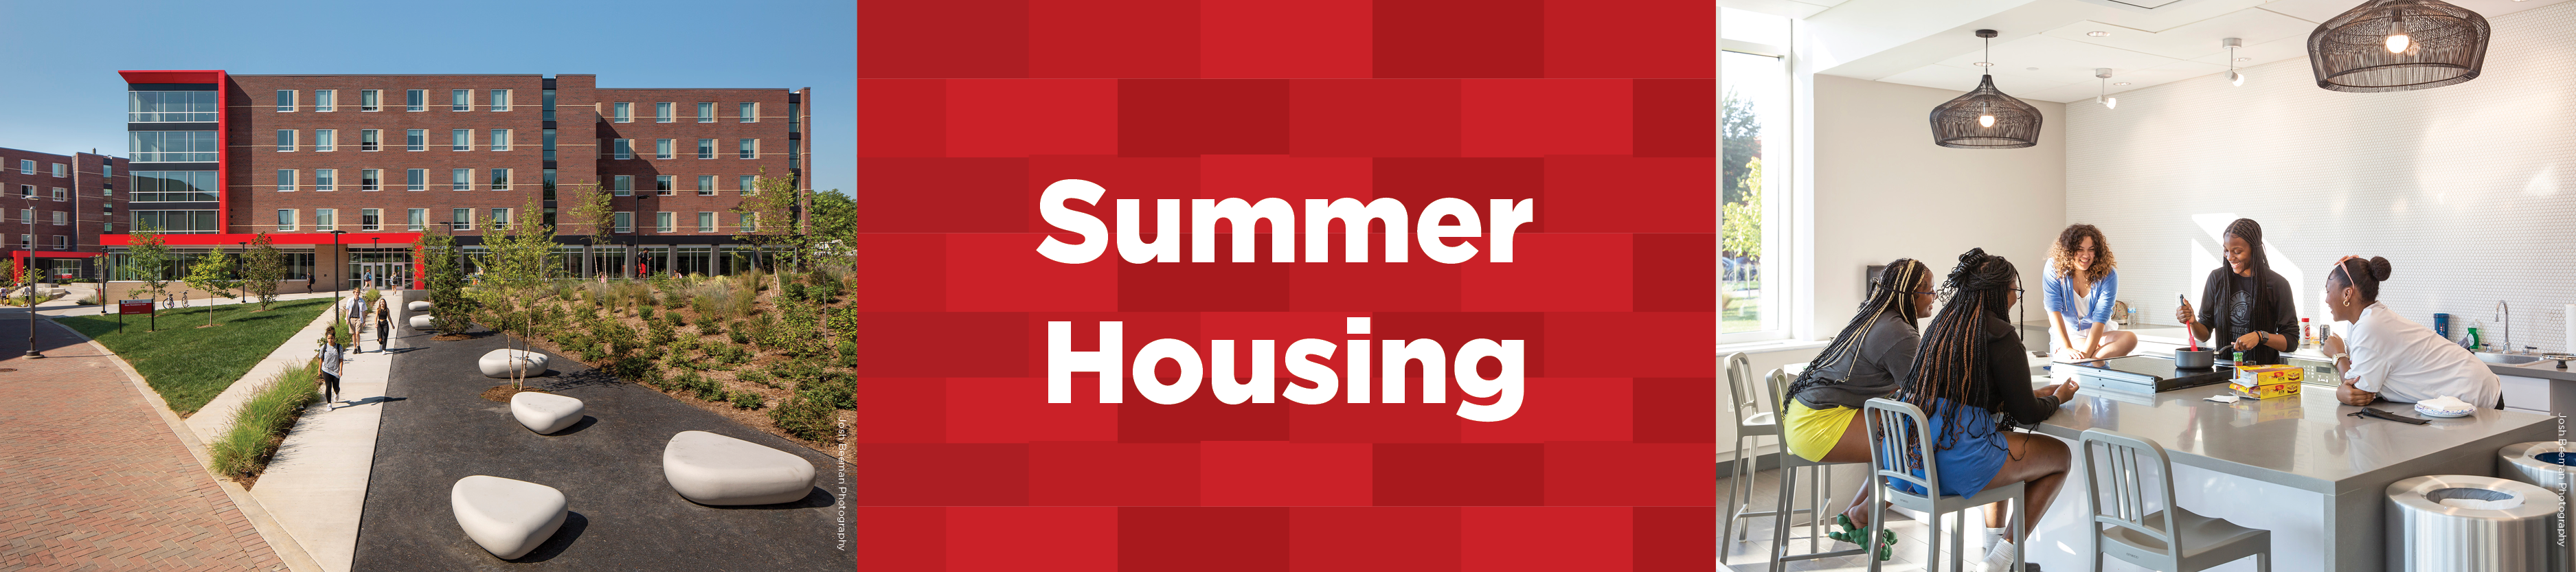 summer housing in belknap village south